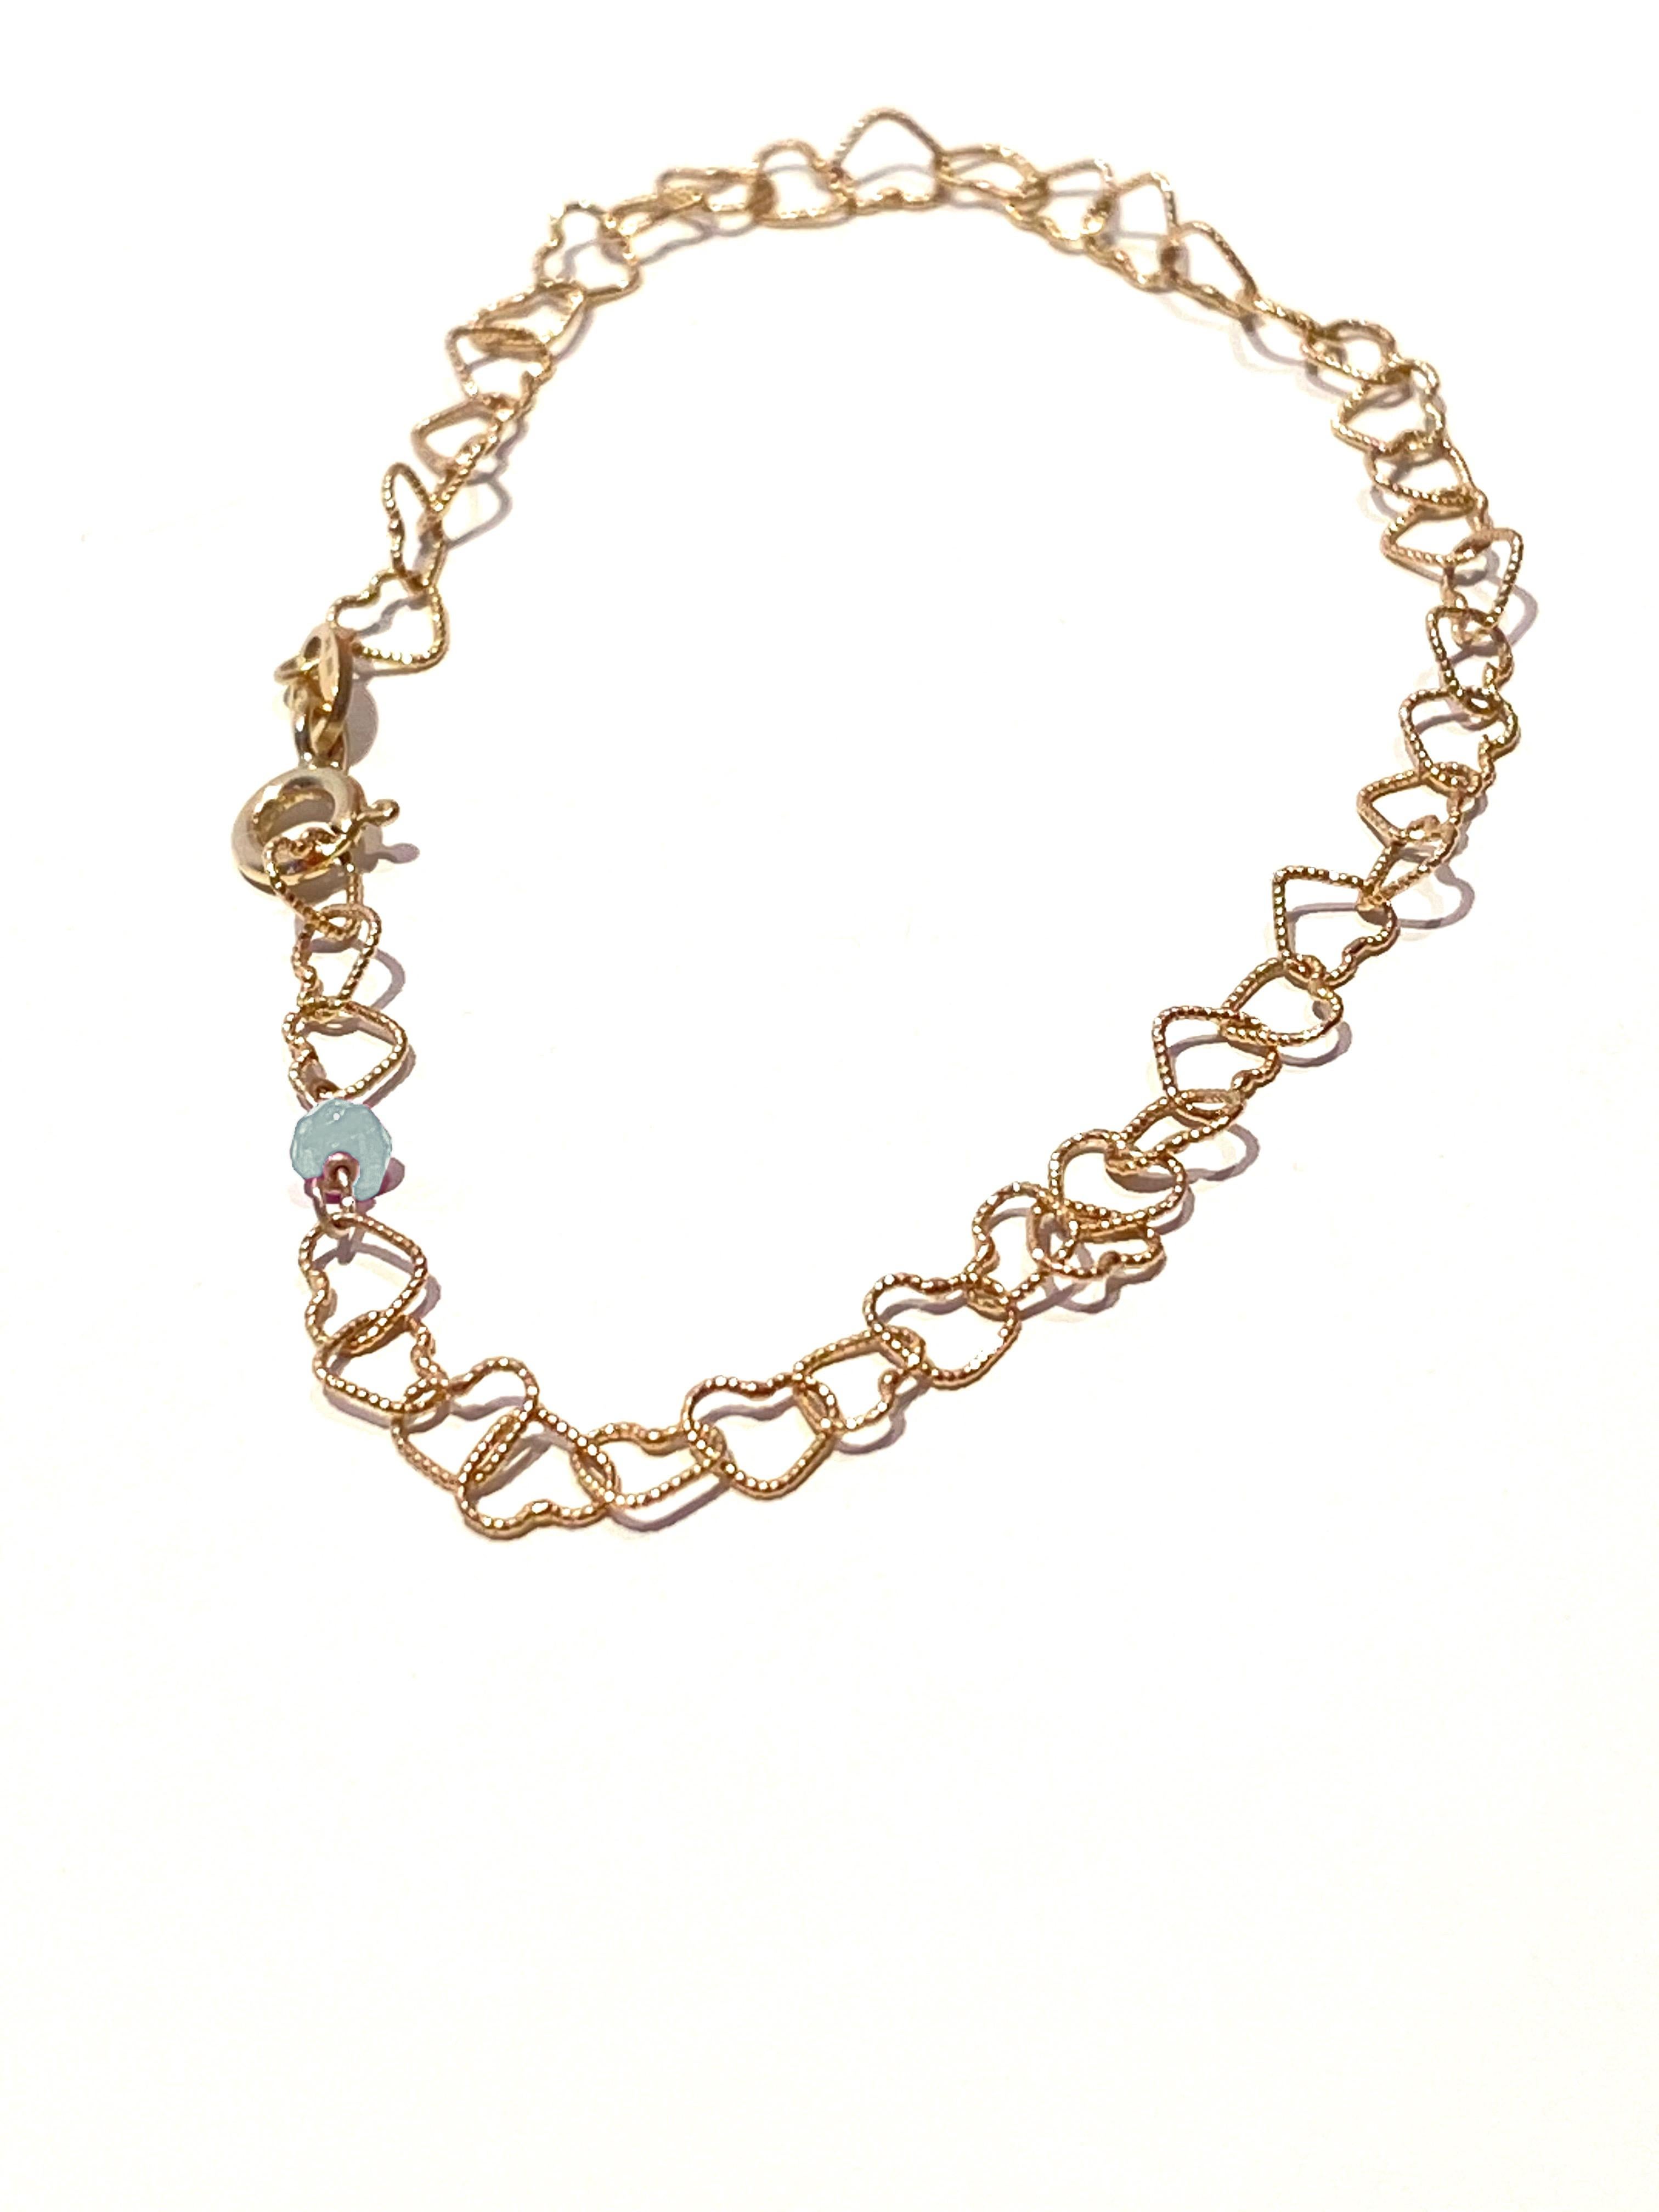 Romantic 0.35 Carat Bead Cut Aquamarine 18 Karat Yellow Gold Little Heart Chain Bracelet  For Sale